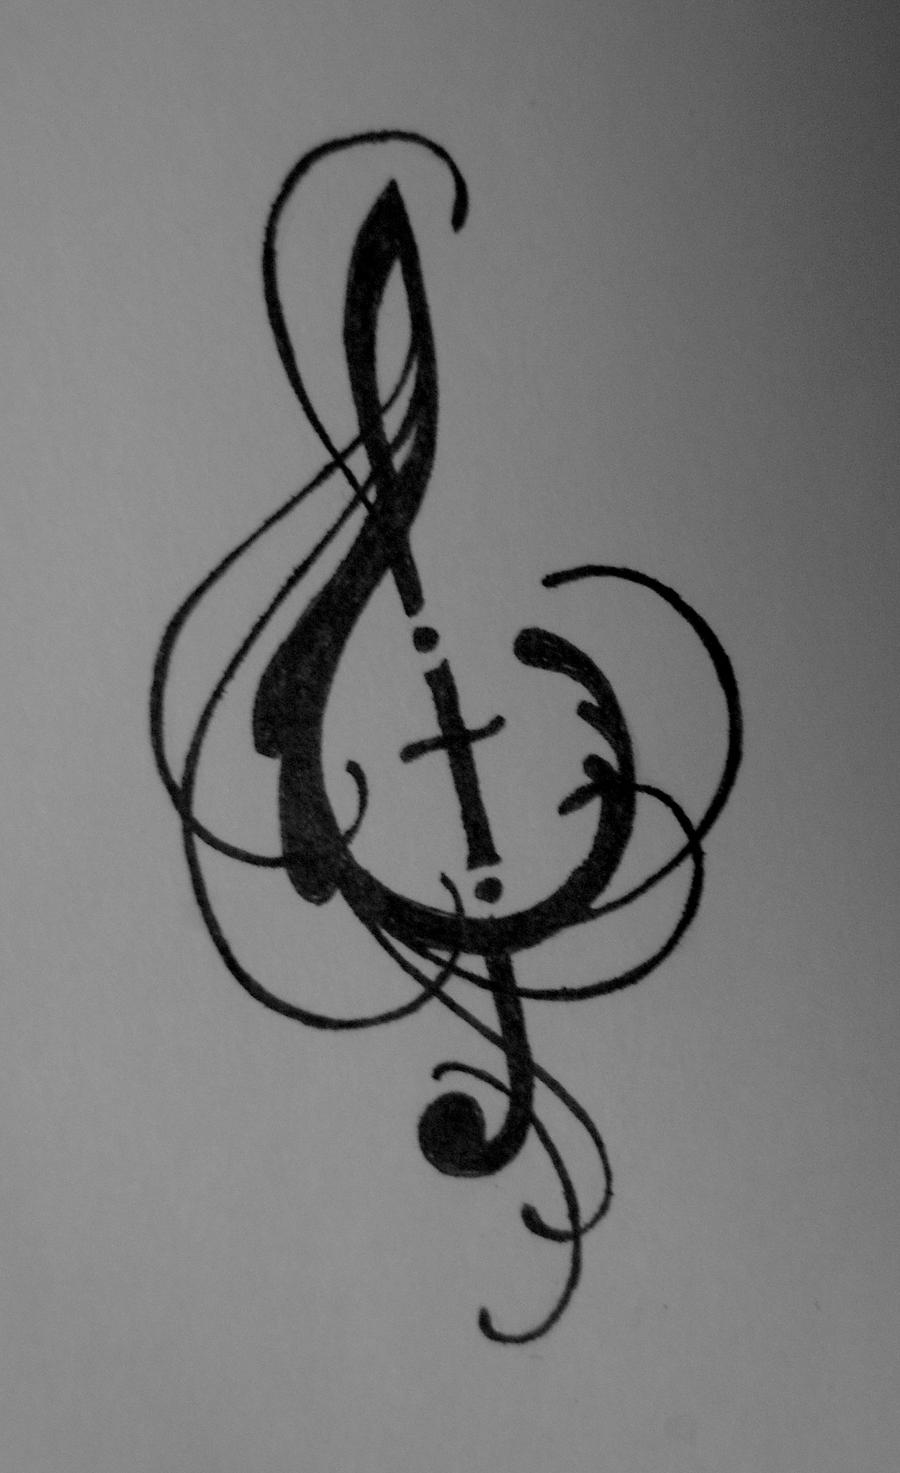 Music and Cross design